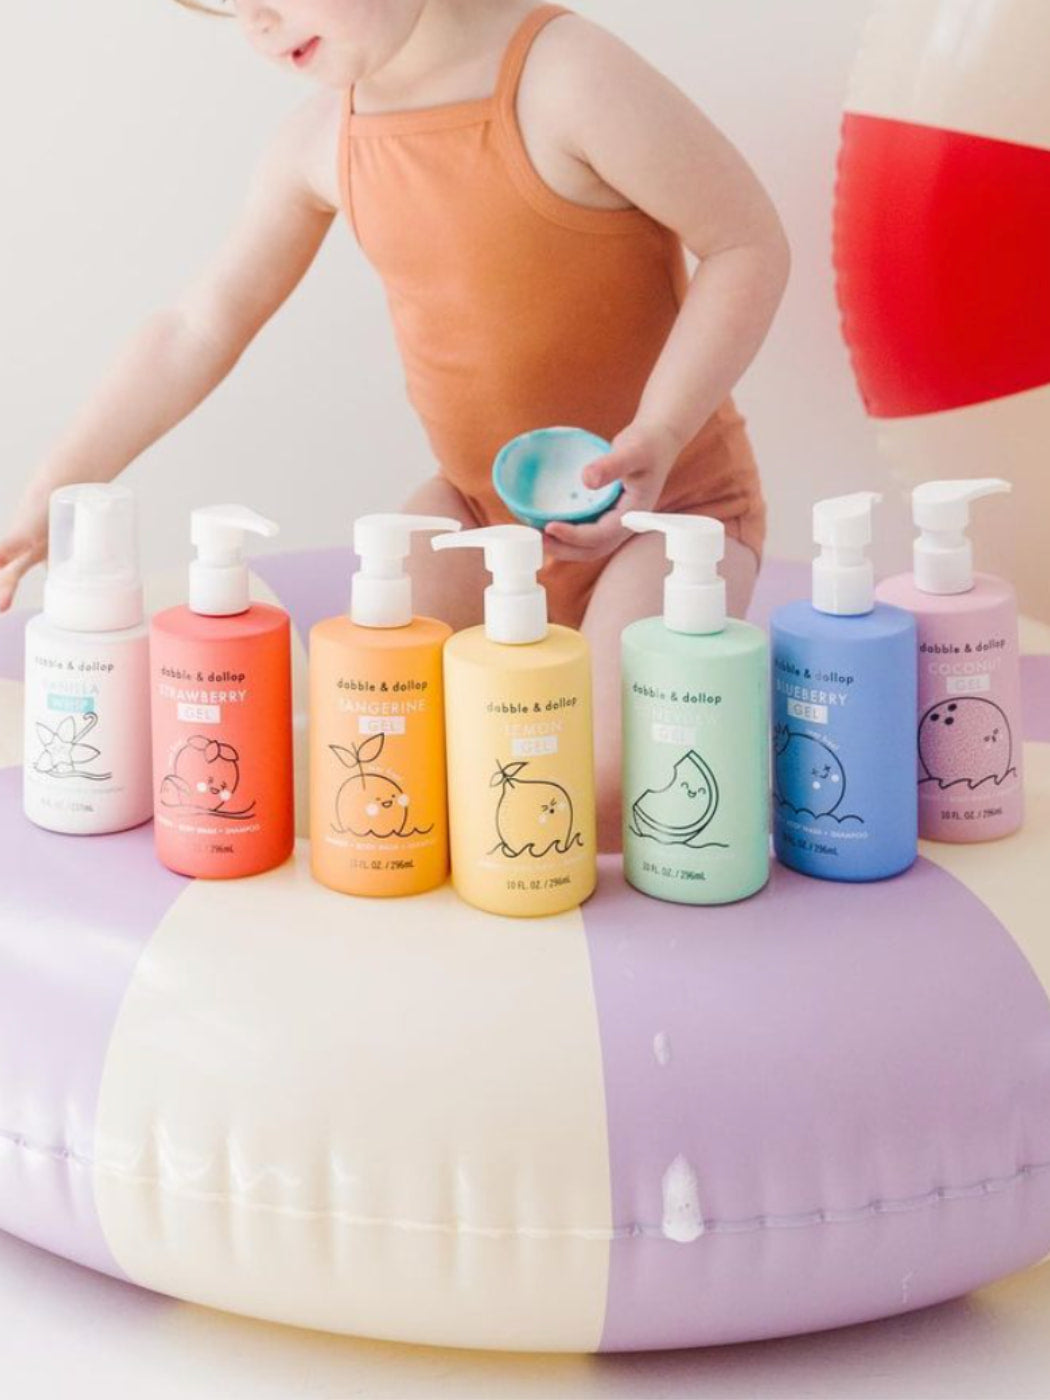 Shampoo, Bubble Bath & Body Wash - Blueberry